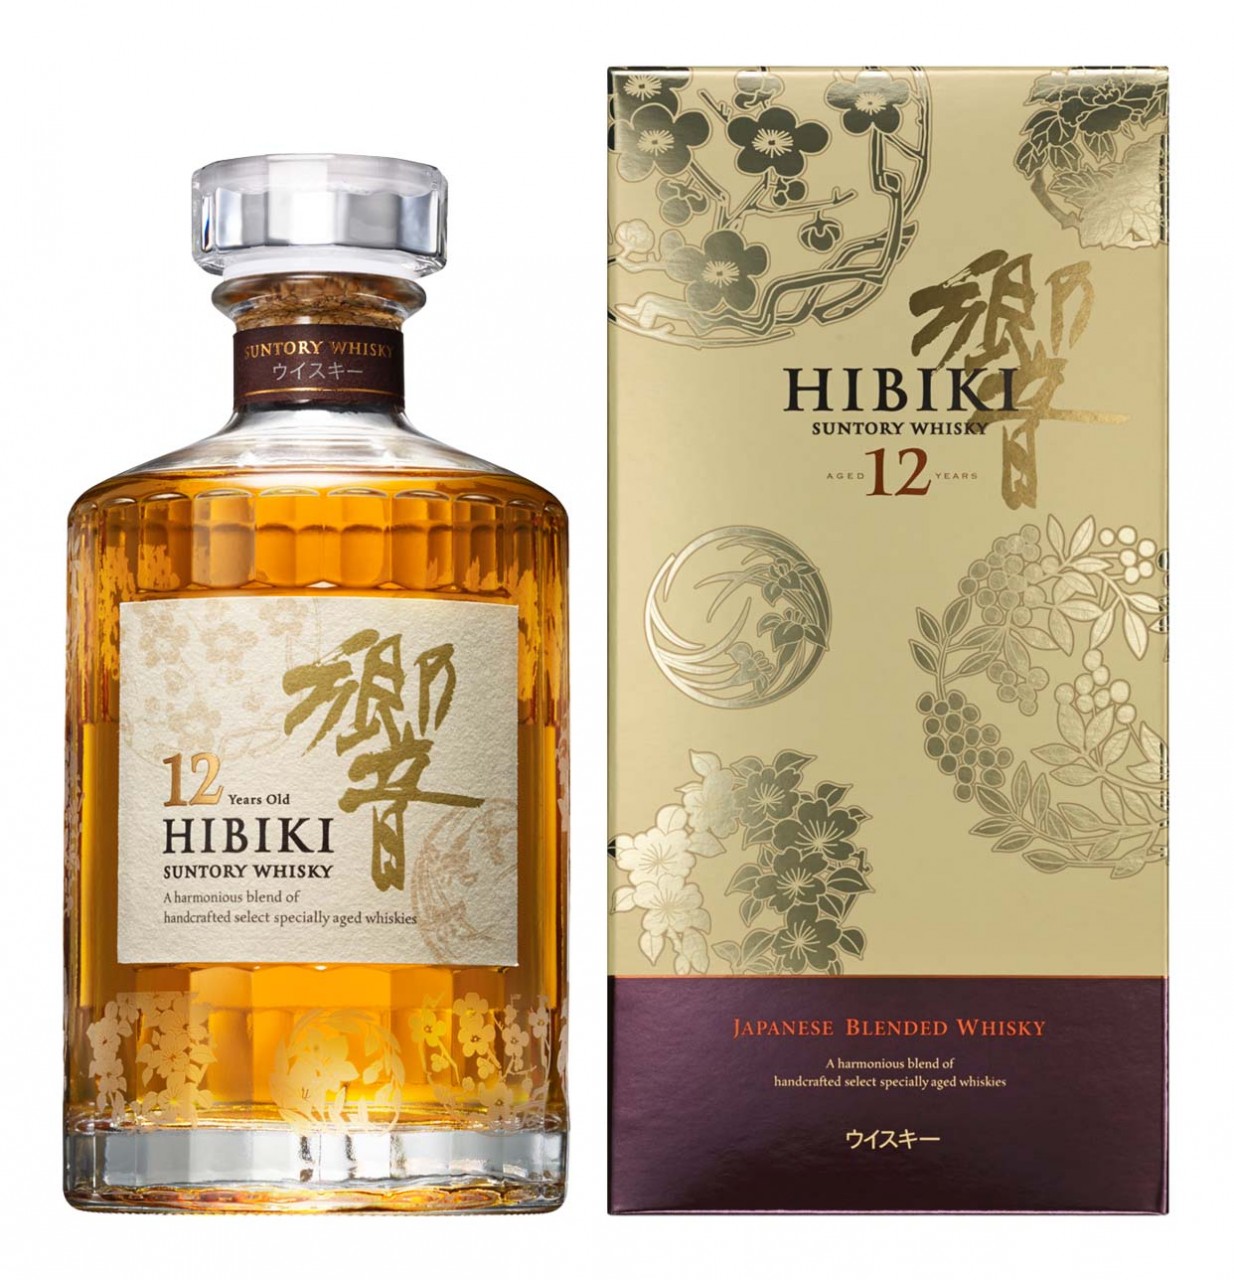 Suntory Hibiki 12Y Whisky special edition 三得利響12年花烏風月特別